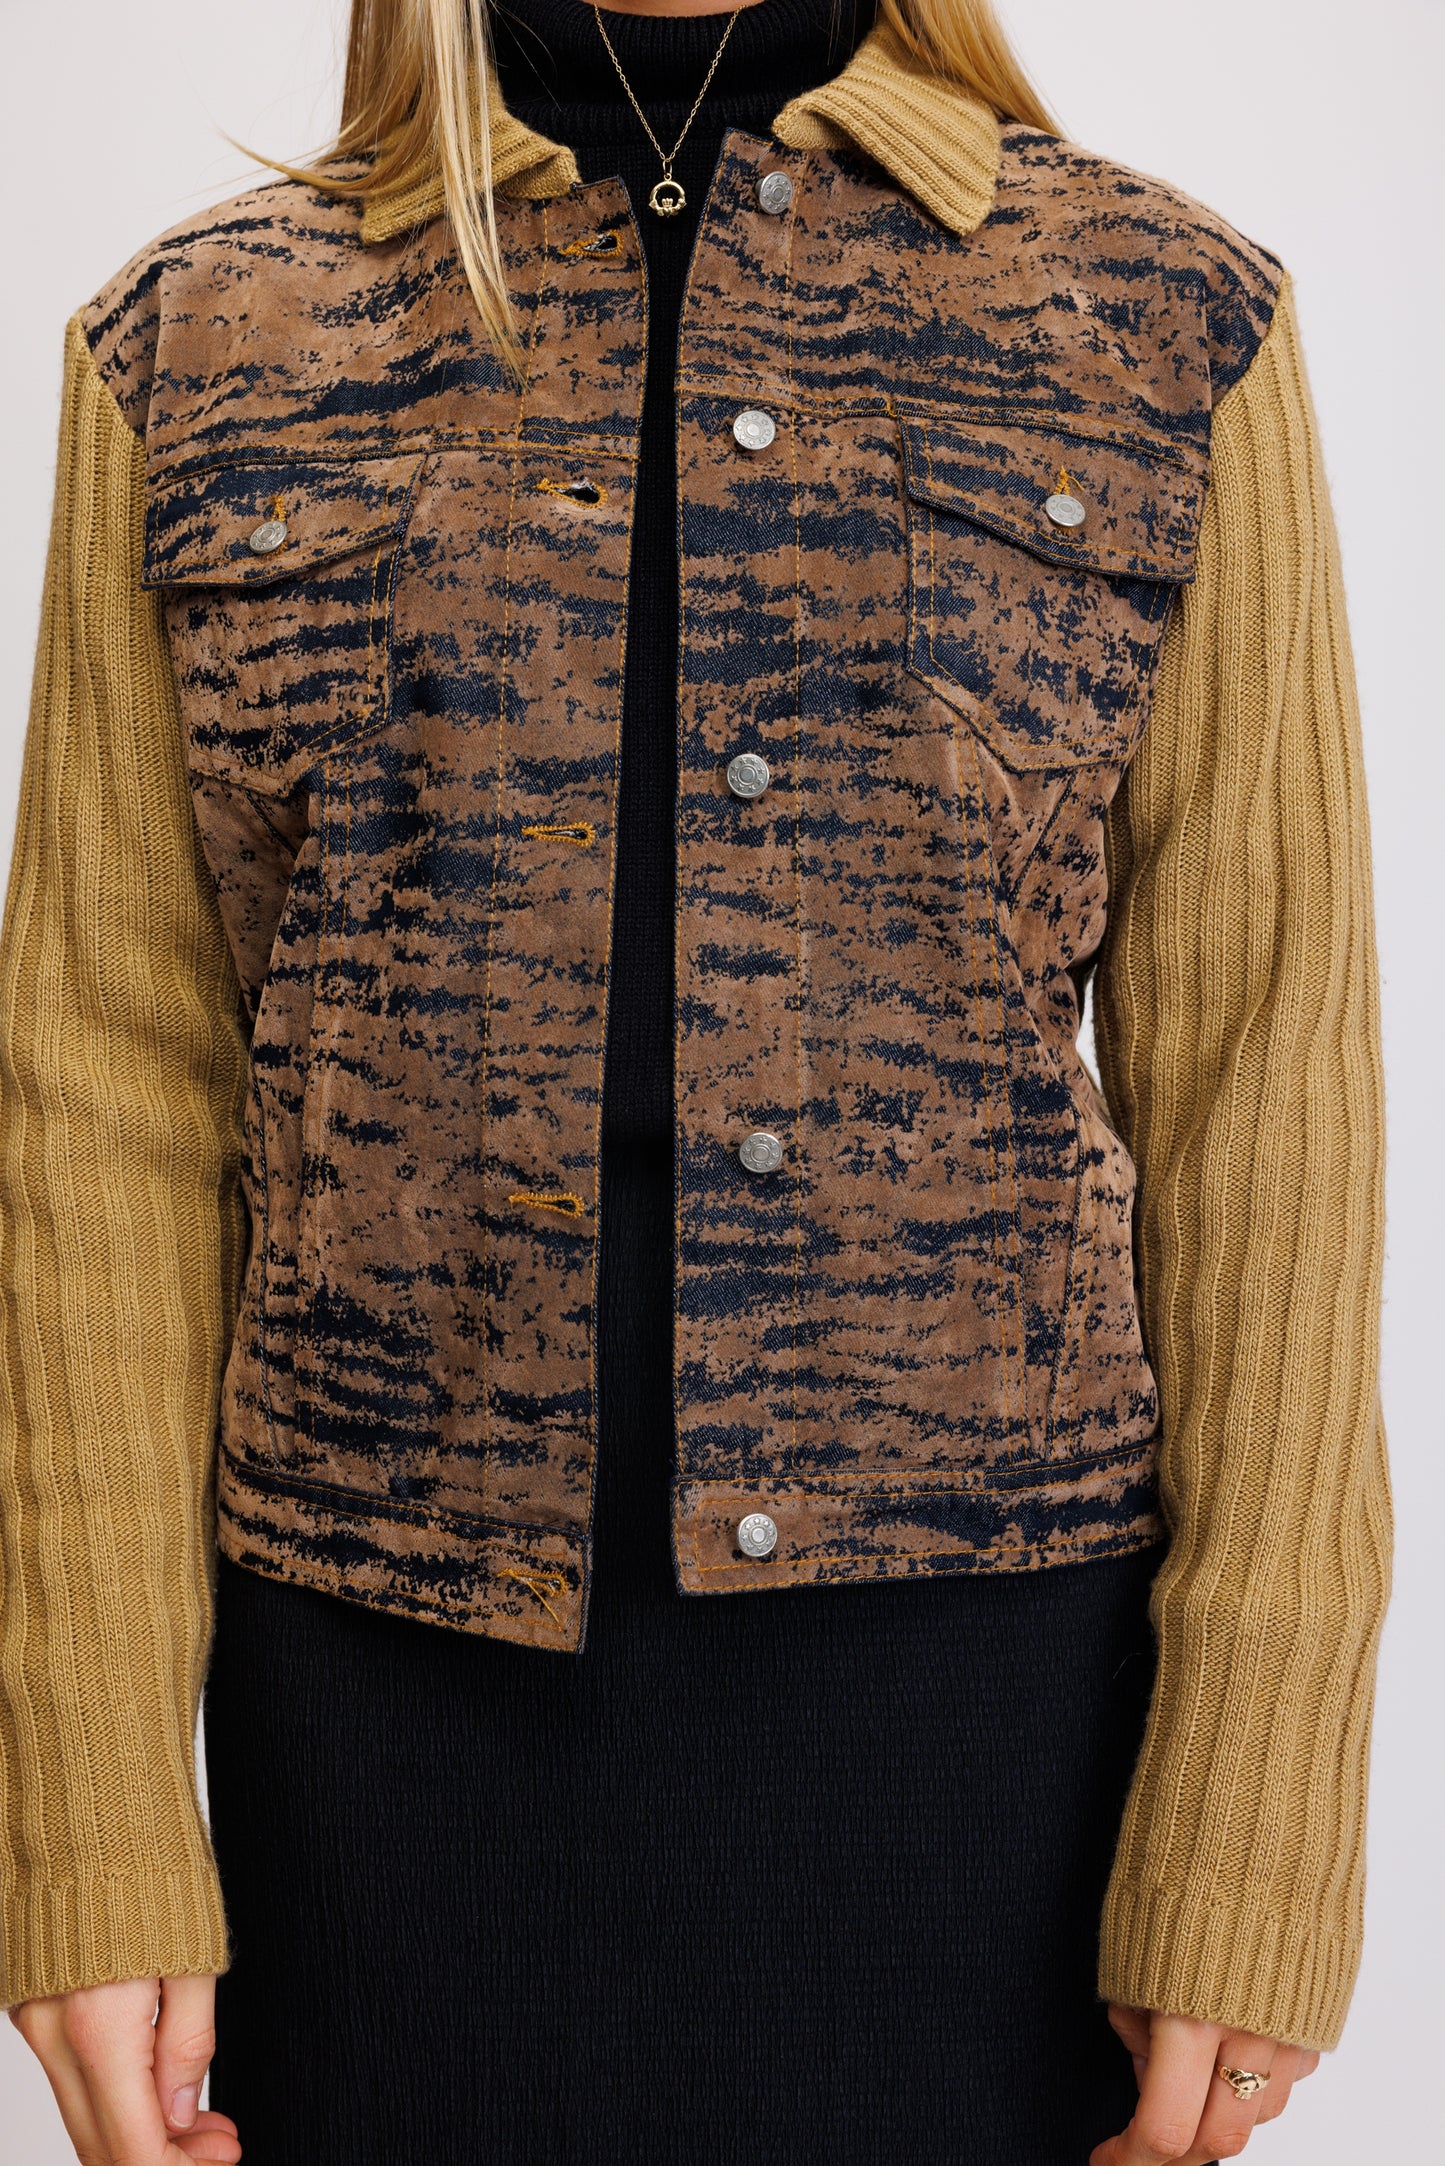 70's Animal Print Knit Jacket S/M